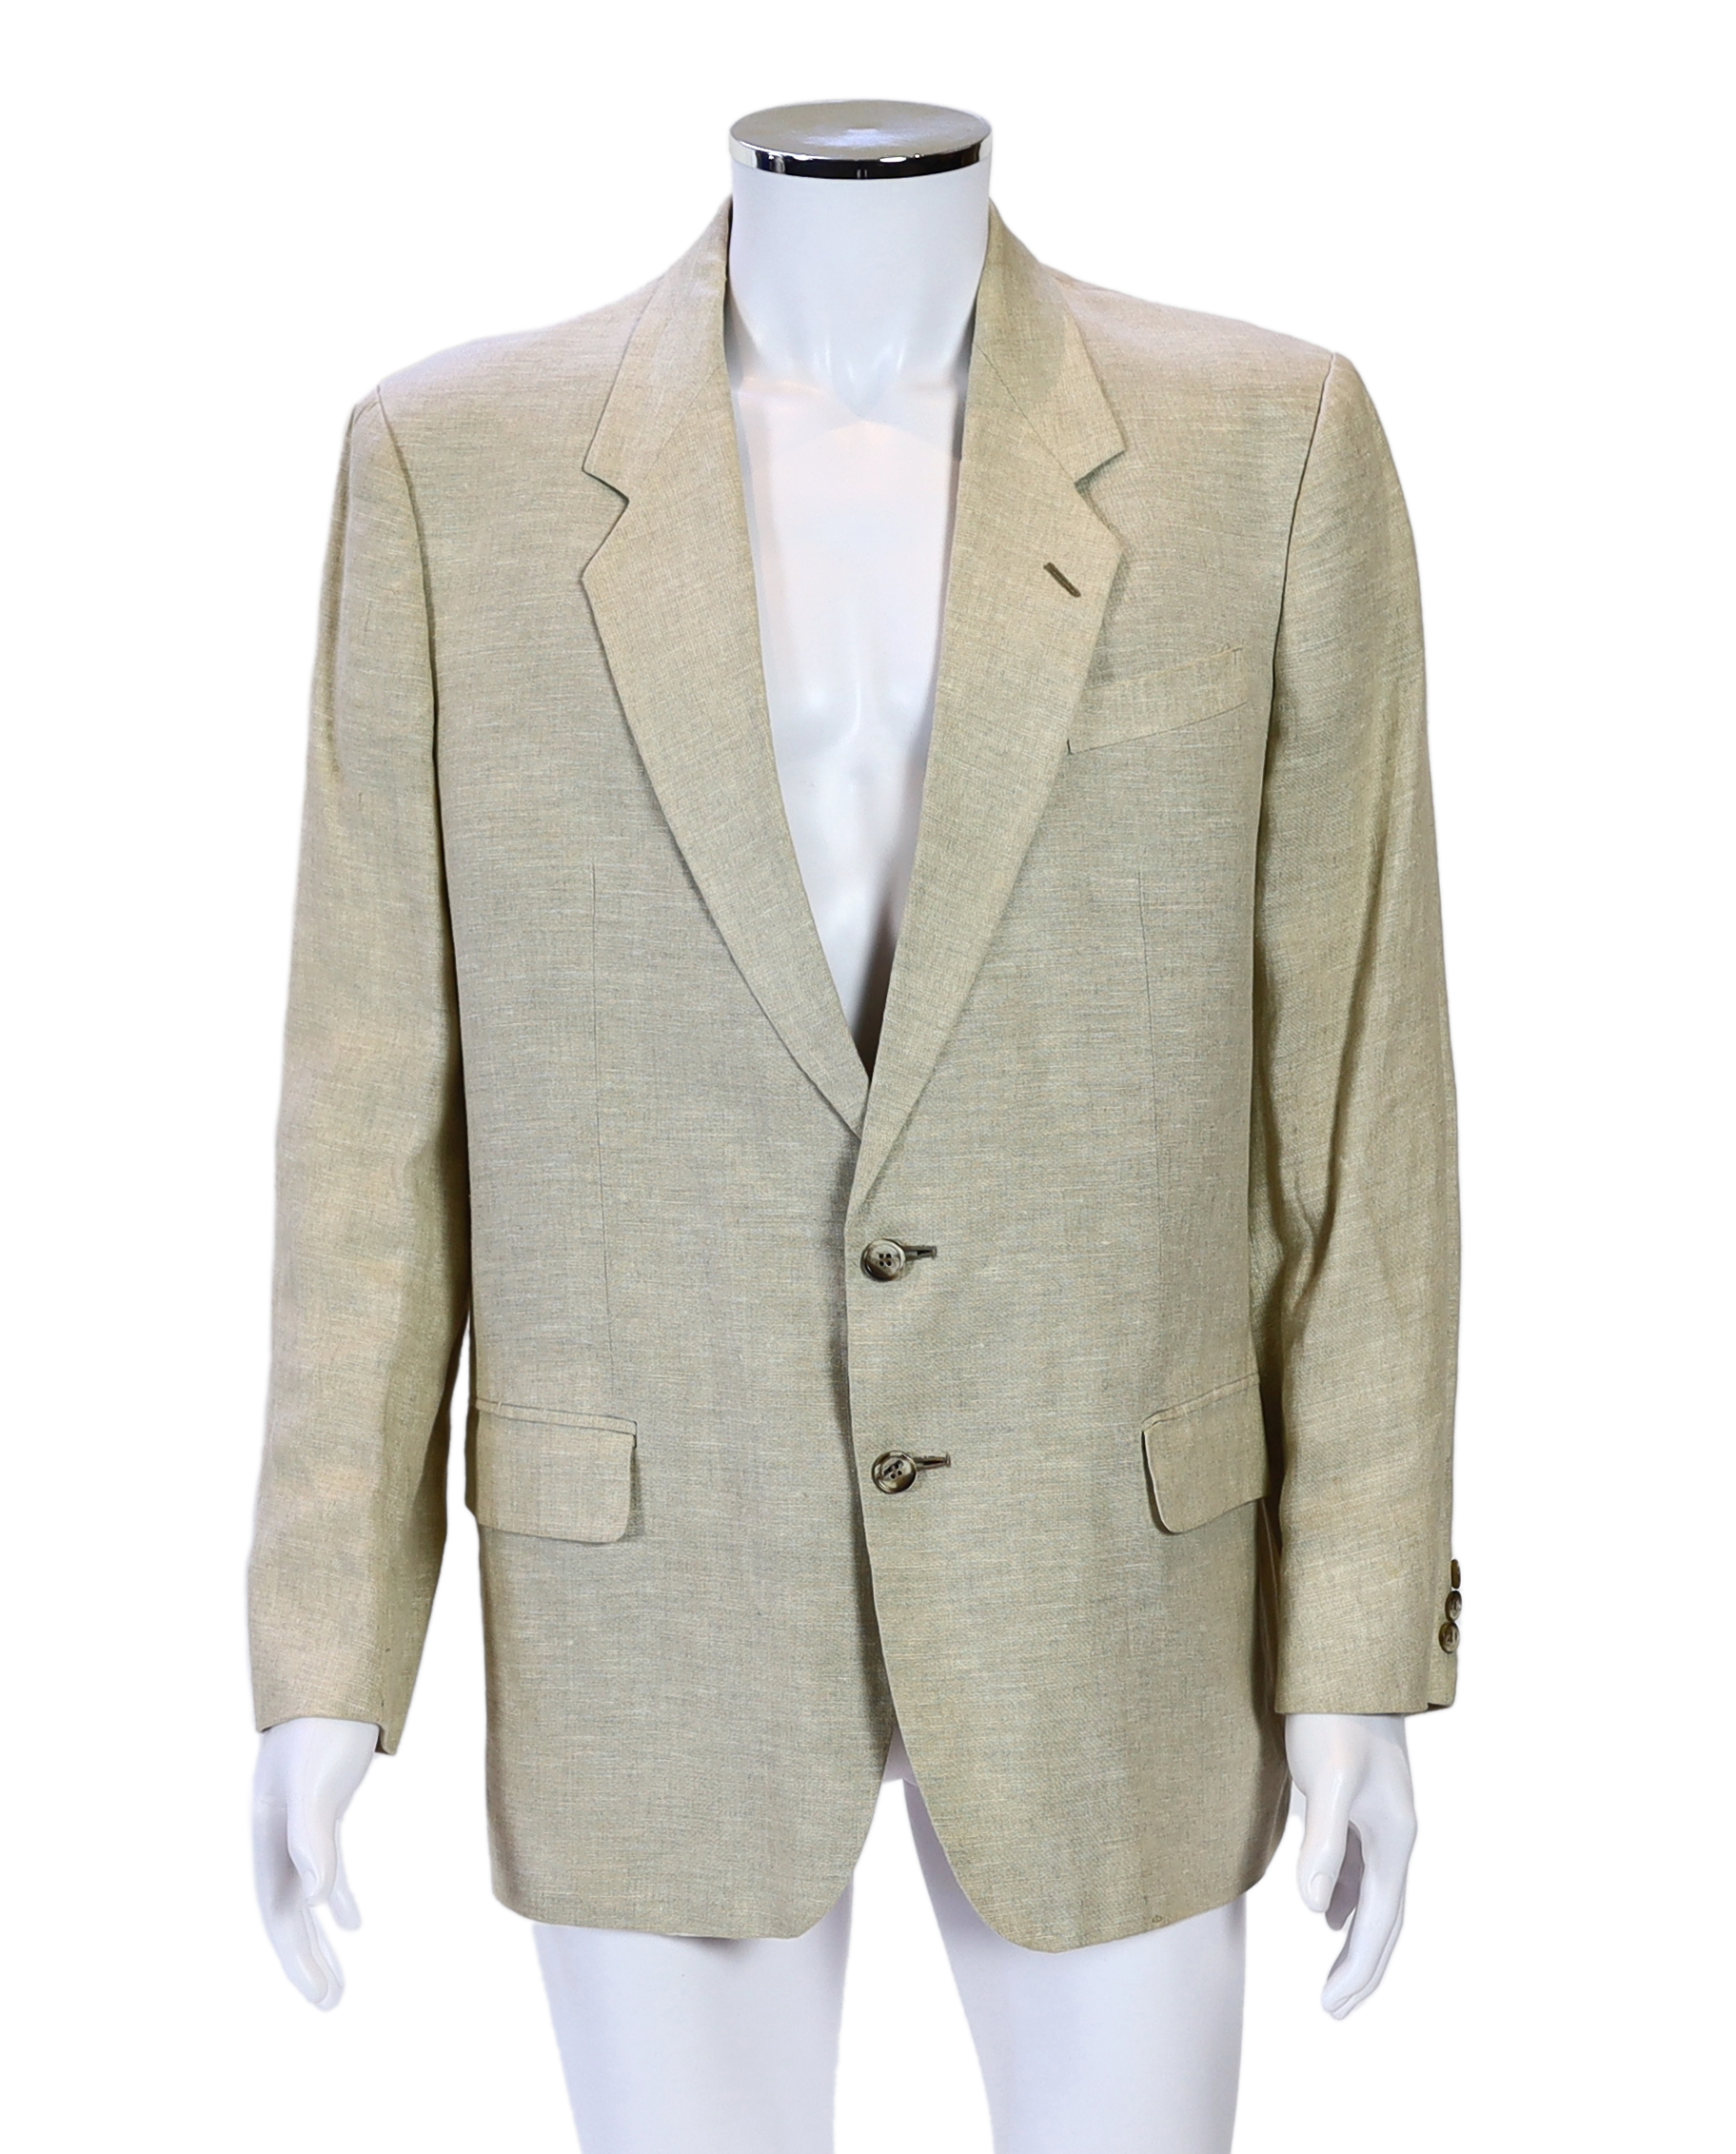 A Paul Smith gentlemen's beige linen single breasted suit, approx size 42